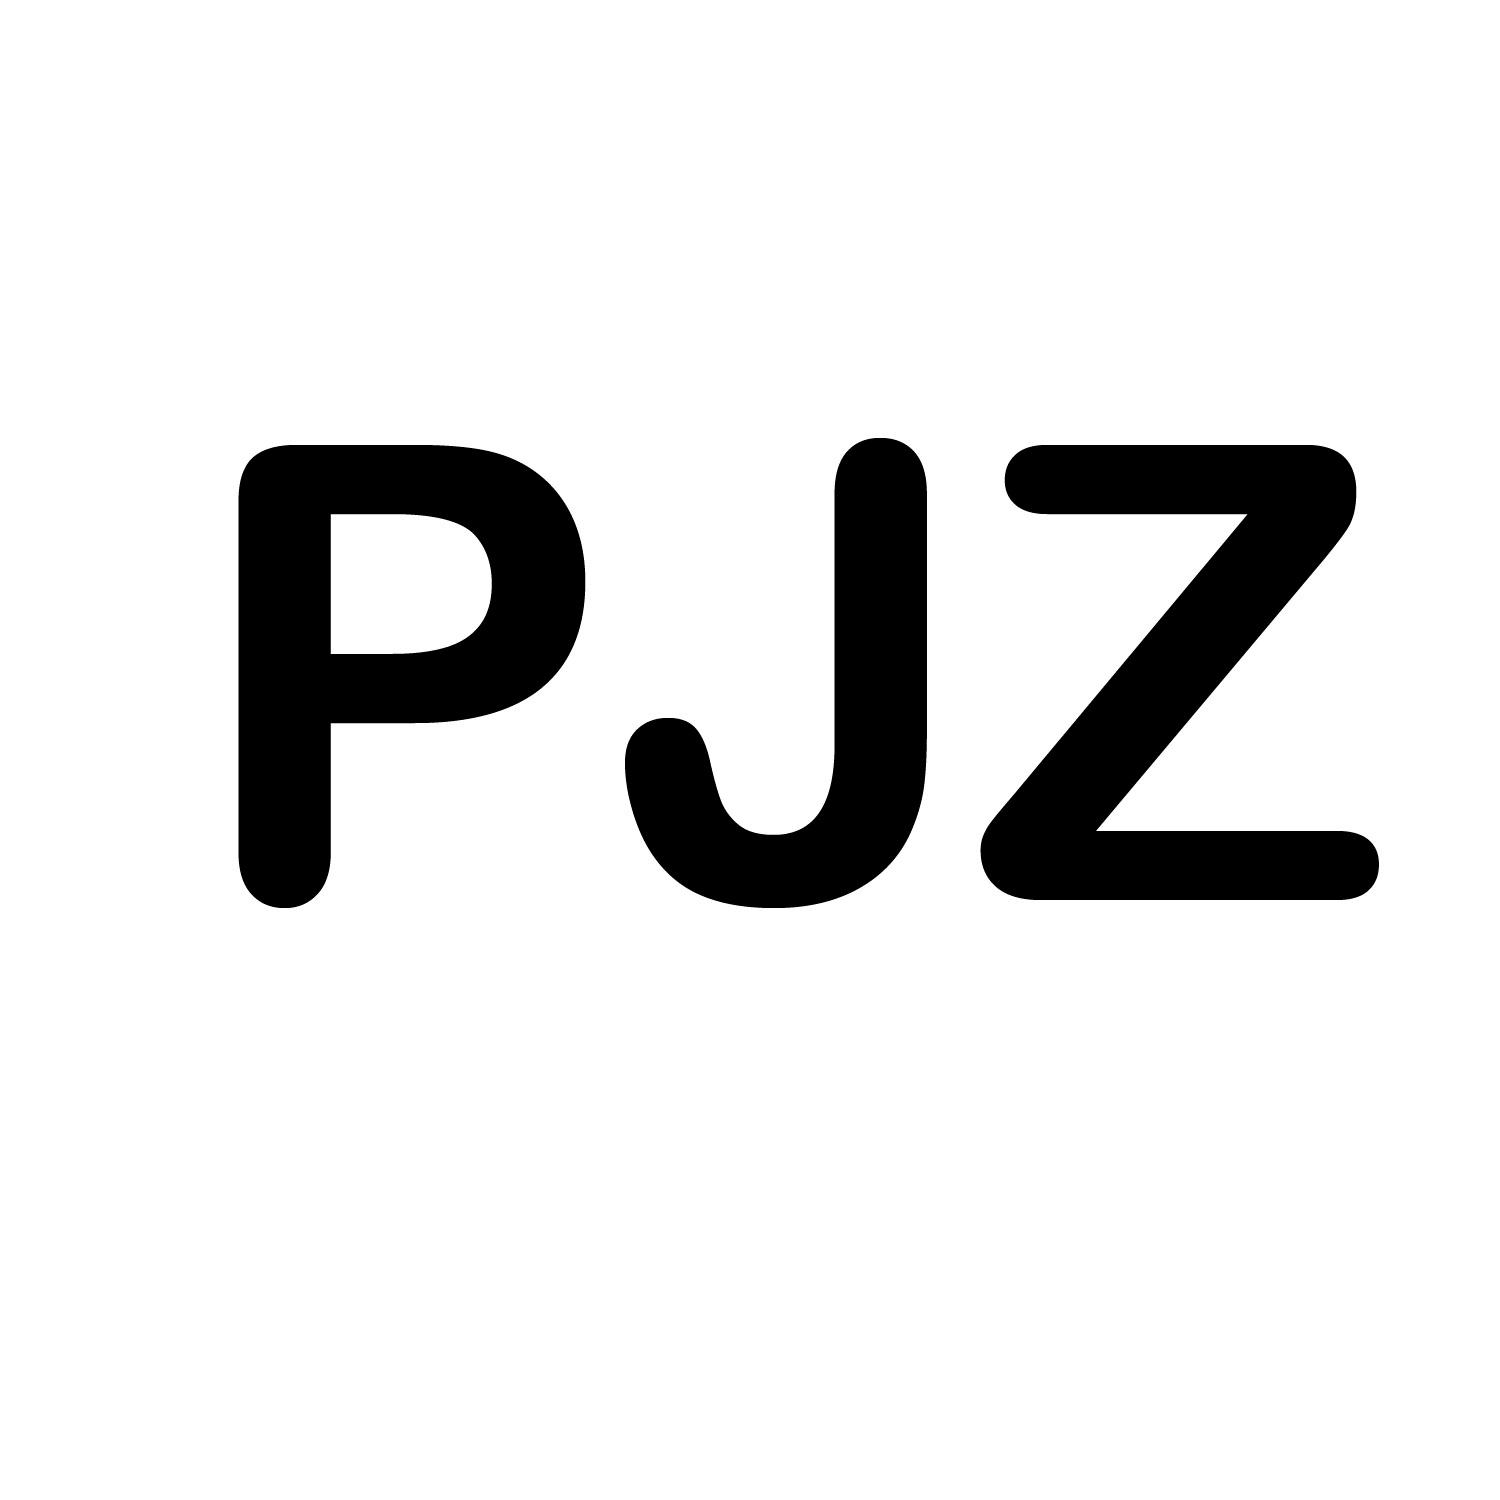 PJZ出牙咬环商标转让费用买卖交易流程